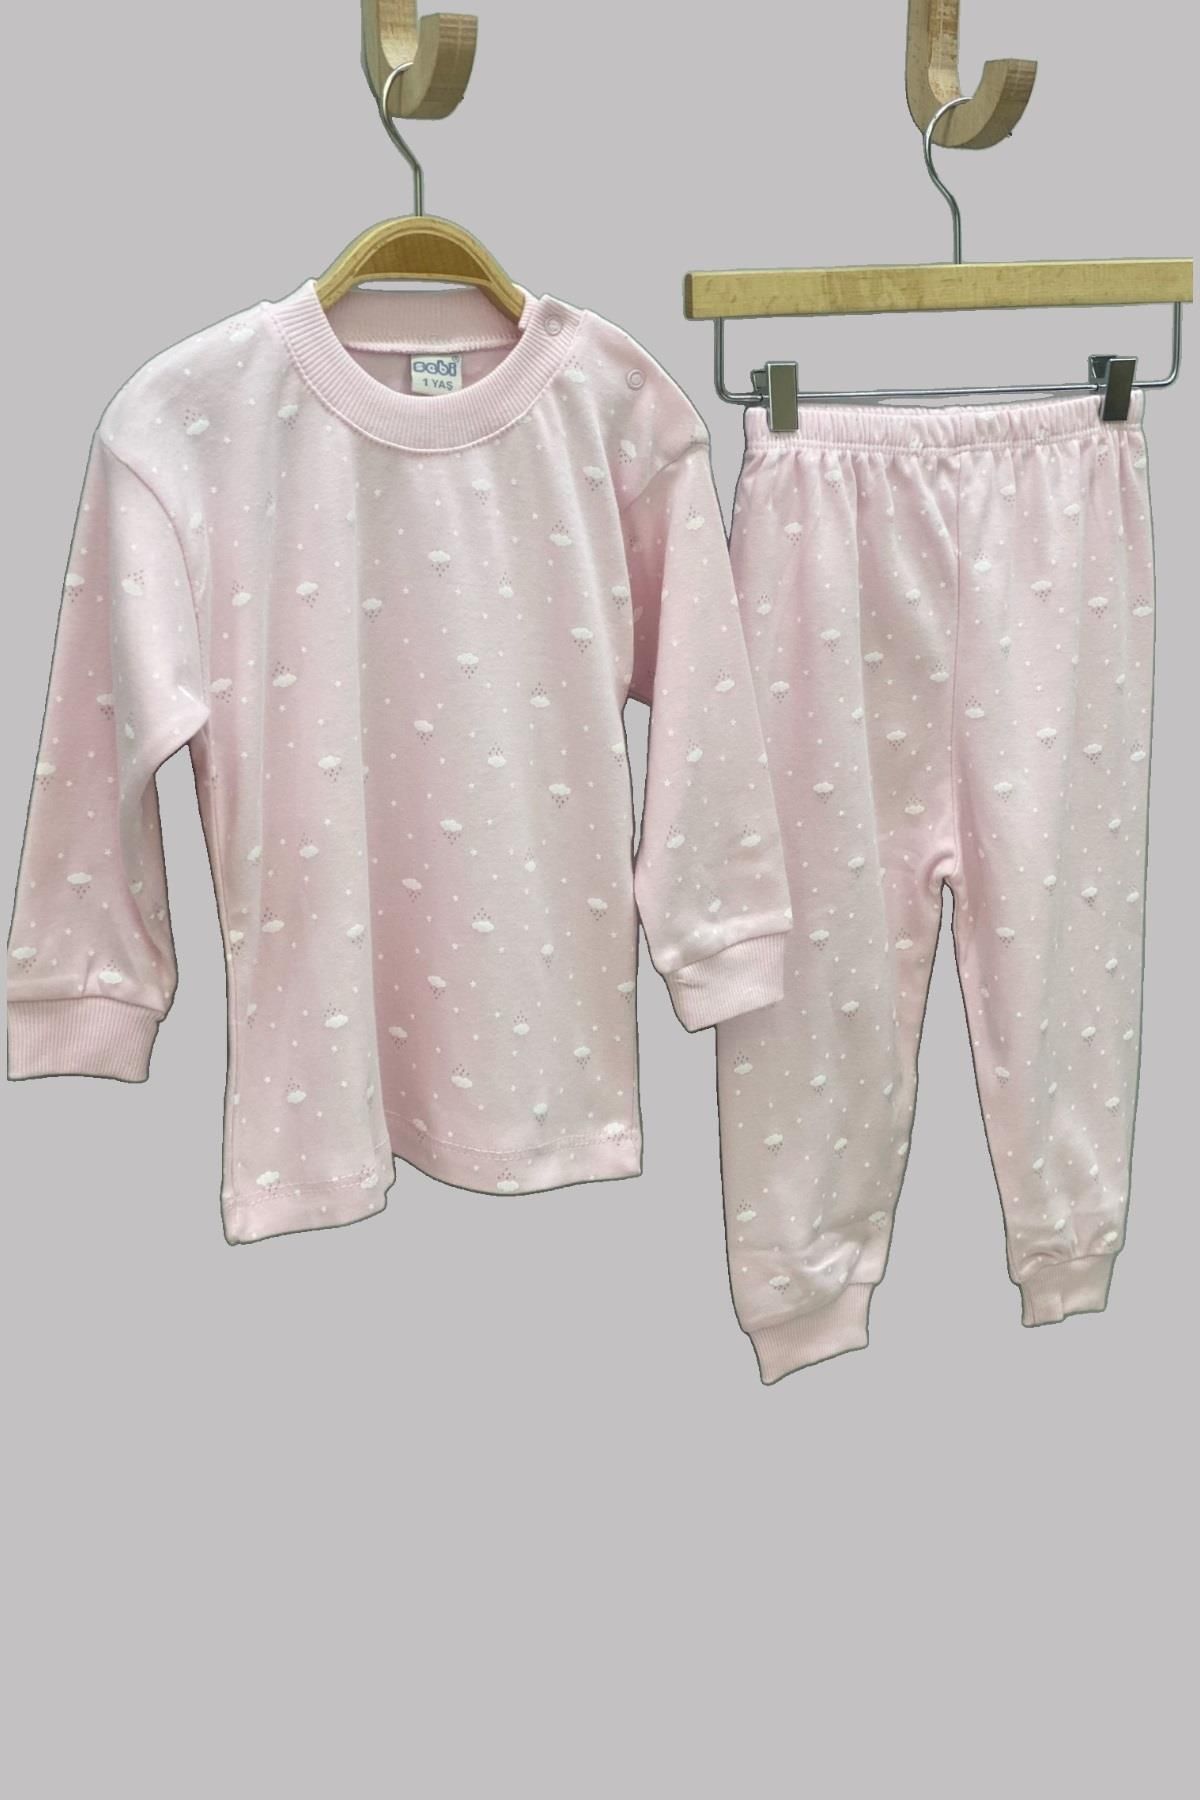 Sebi Bebe Bulut Desenli Pijama Takımı 2407 Pembe